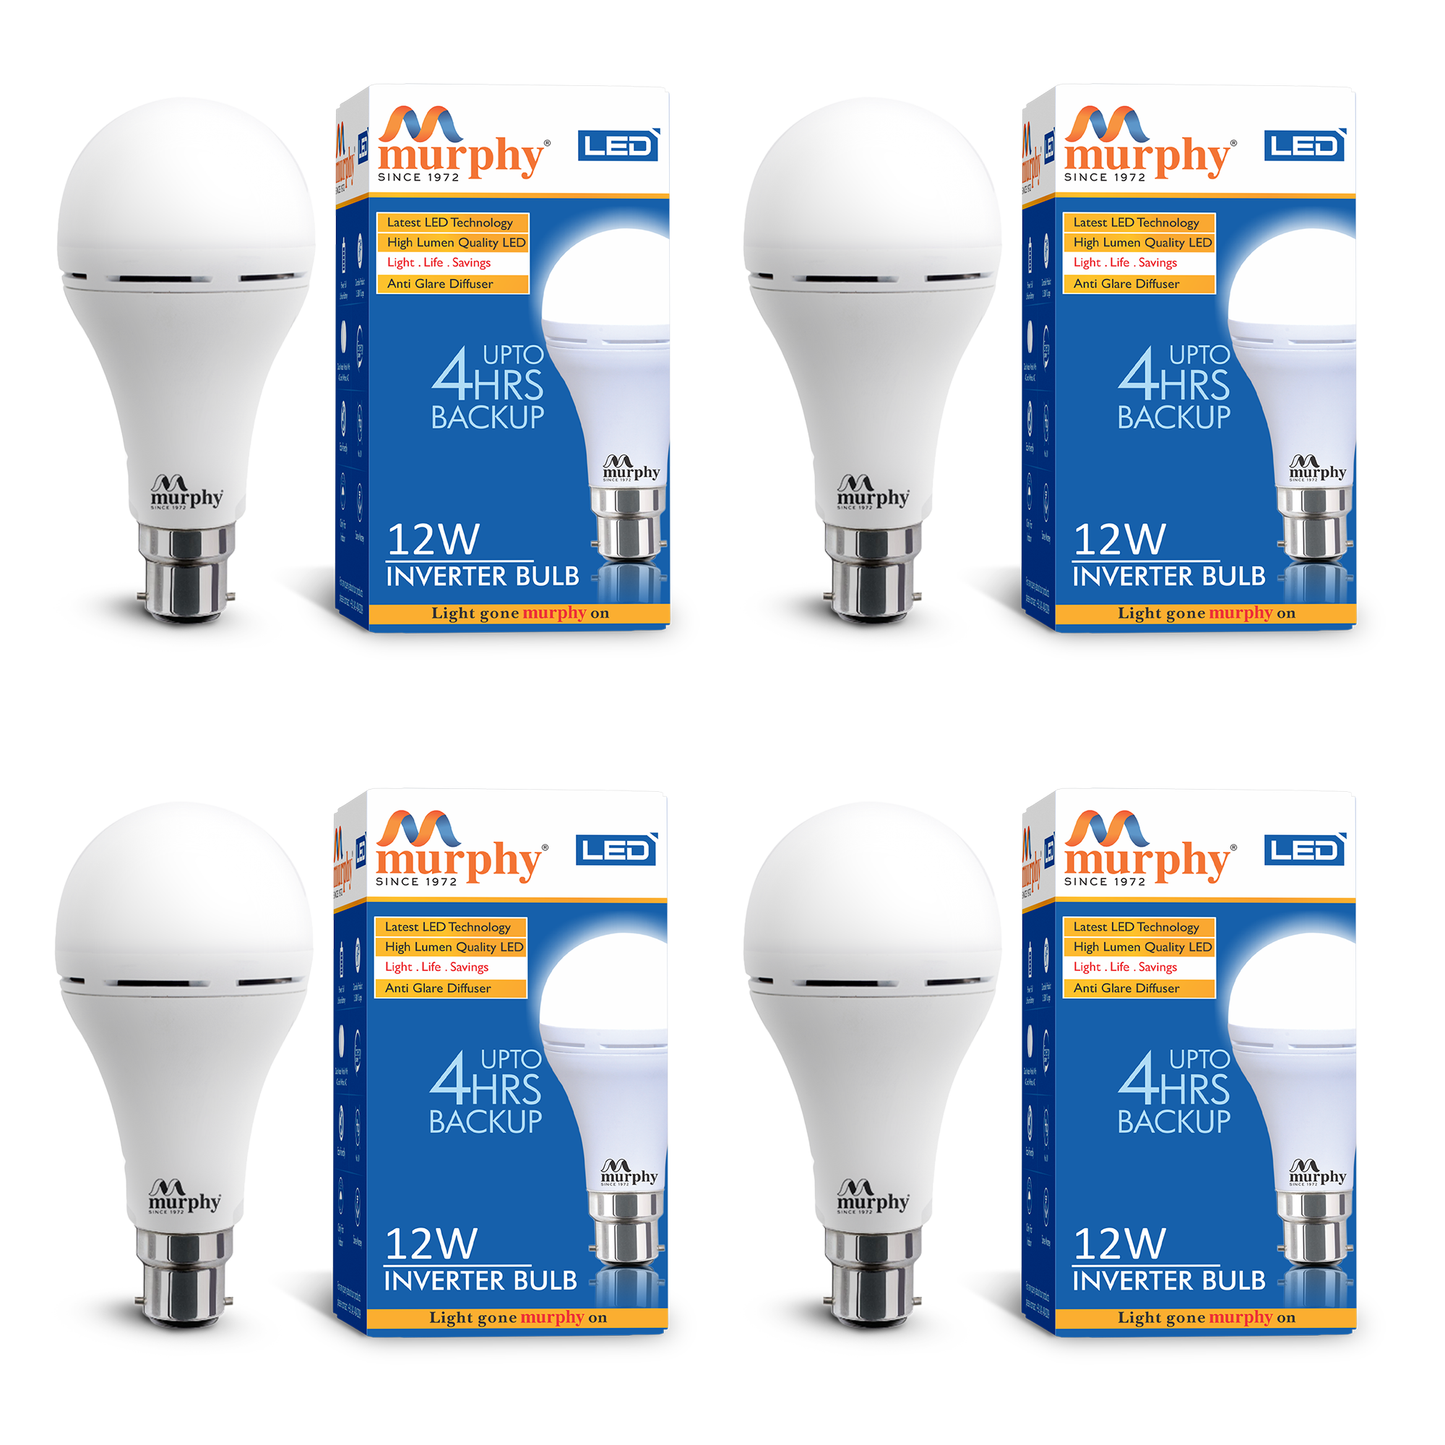 Murphy 12W LED Inverter Bulb